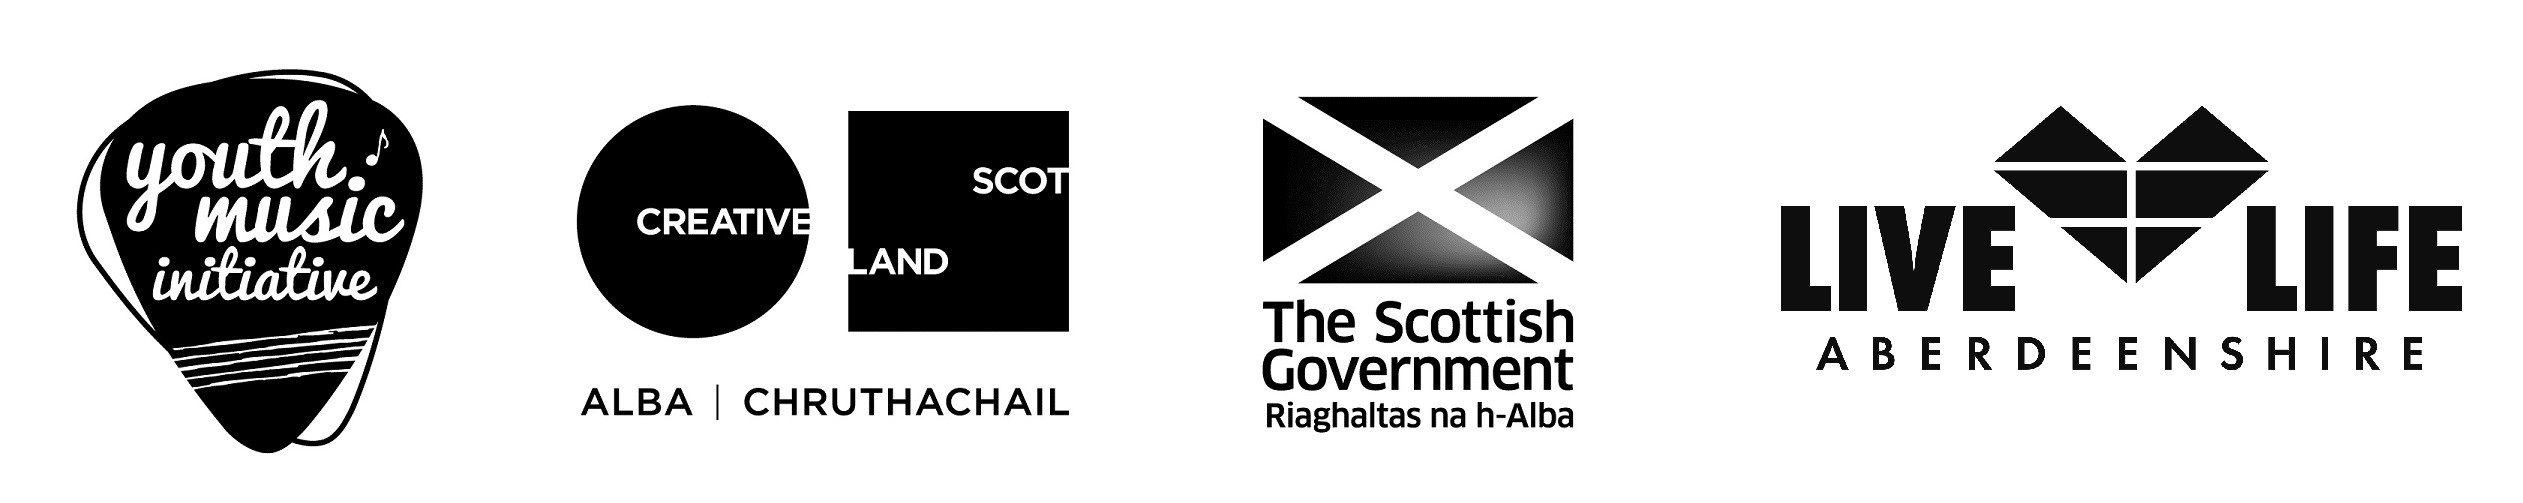 Youth Music Initiative Logo, Creative Scotland Logo, Scottish Government Logo and Live Life Aberdeenshire Logo